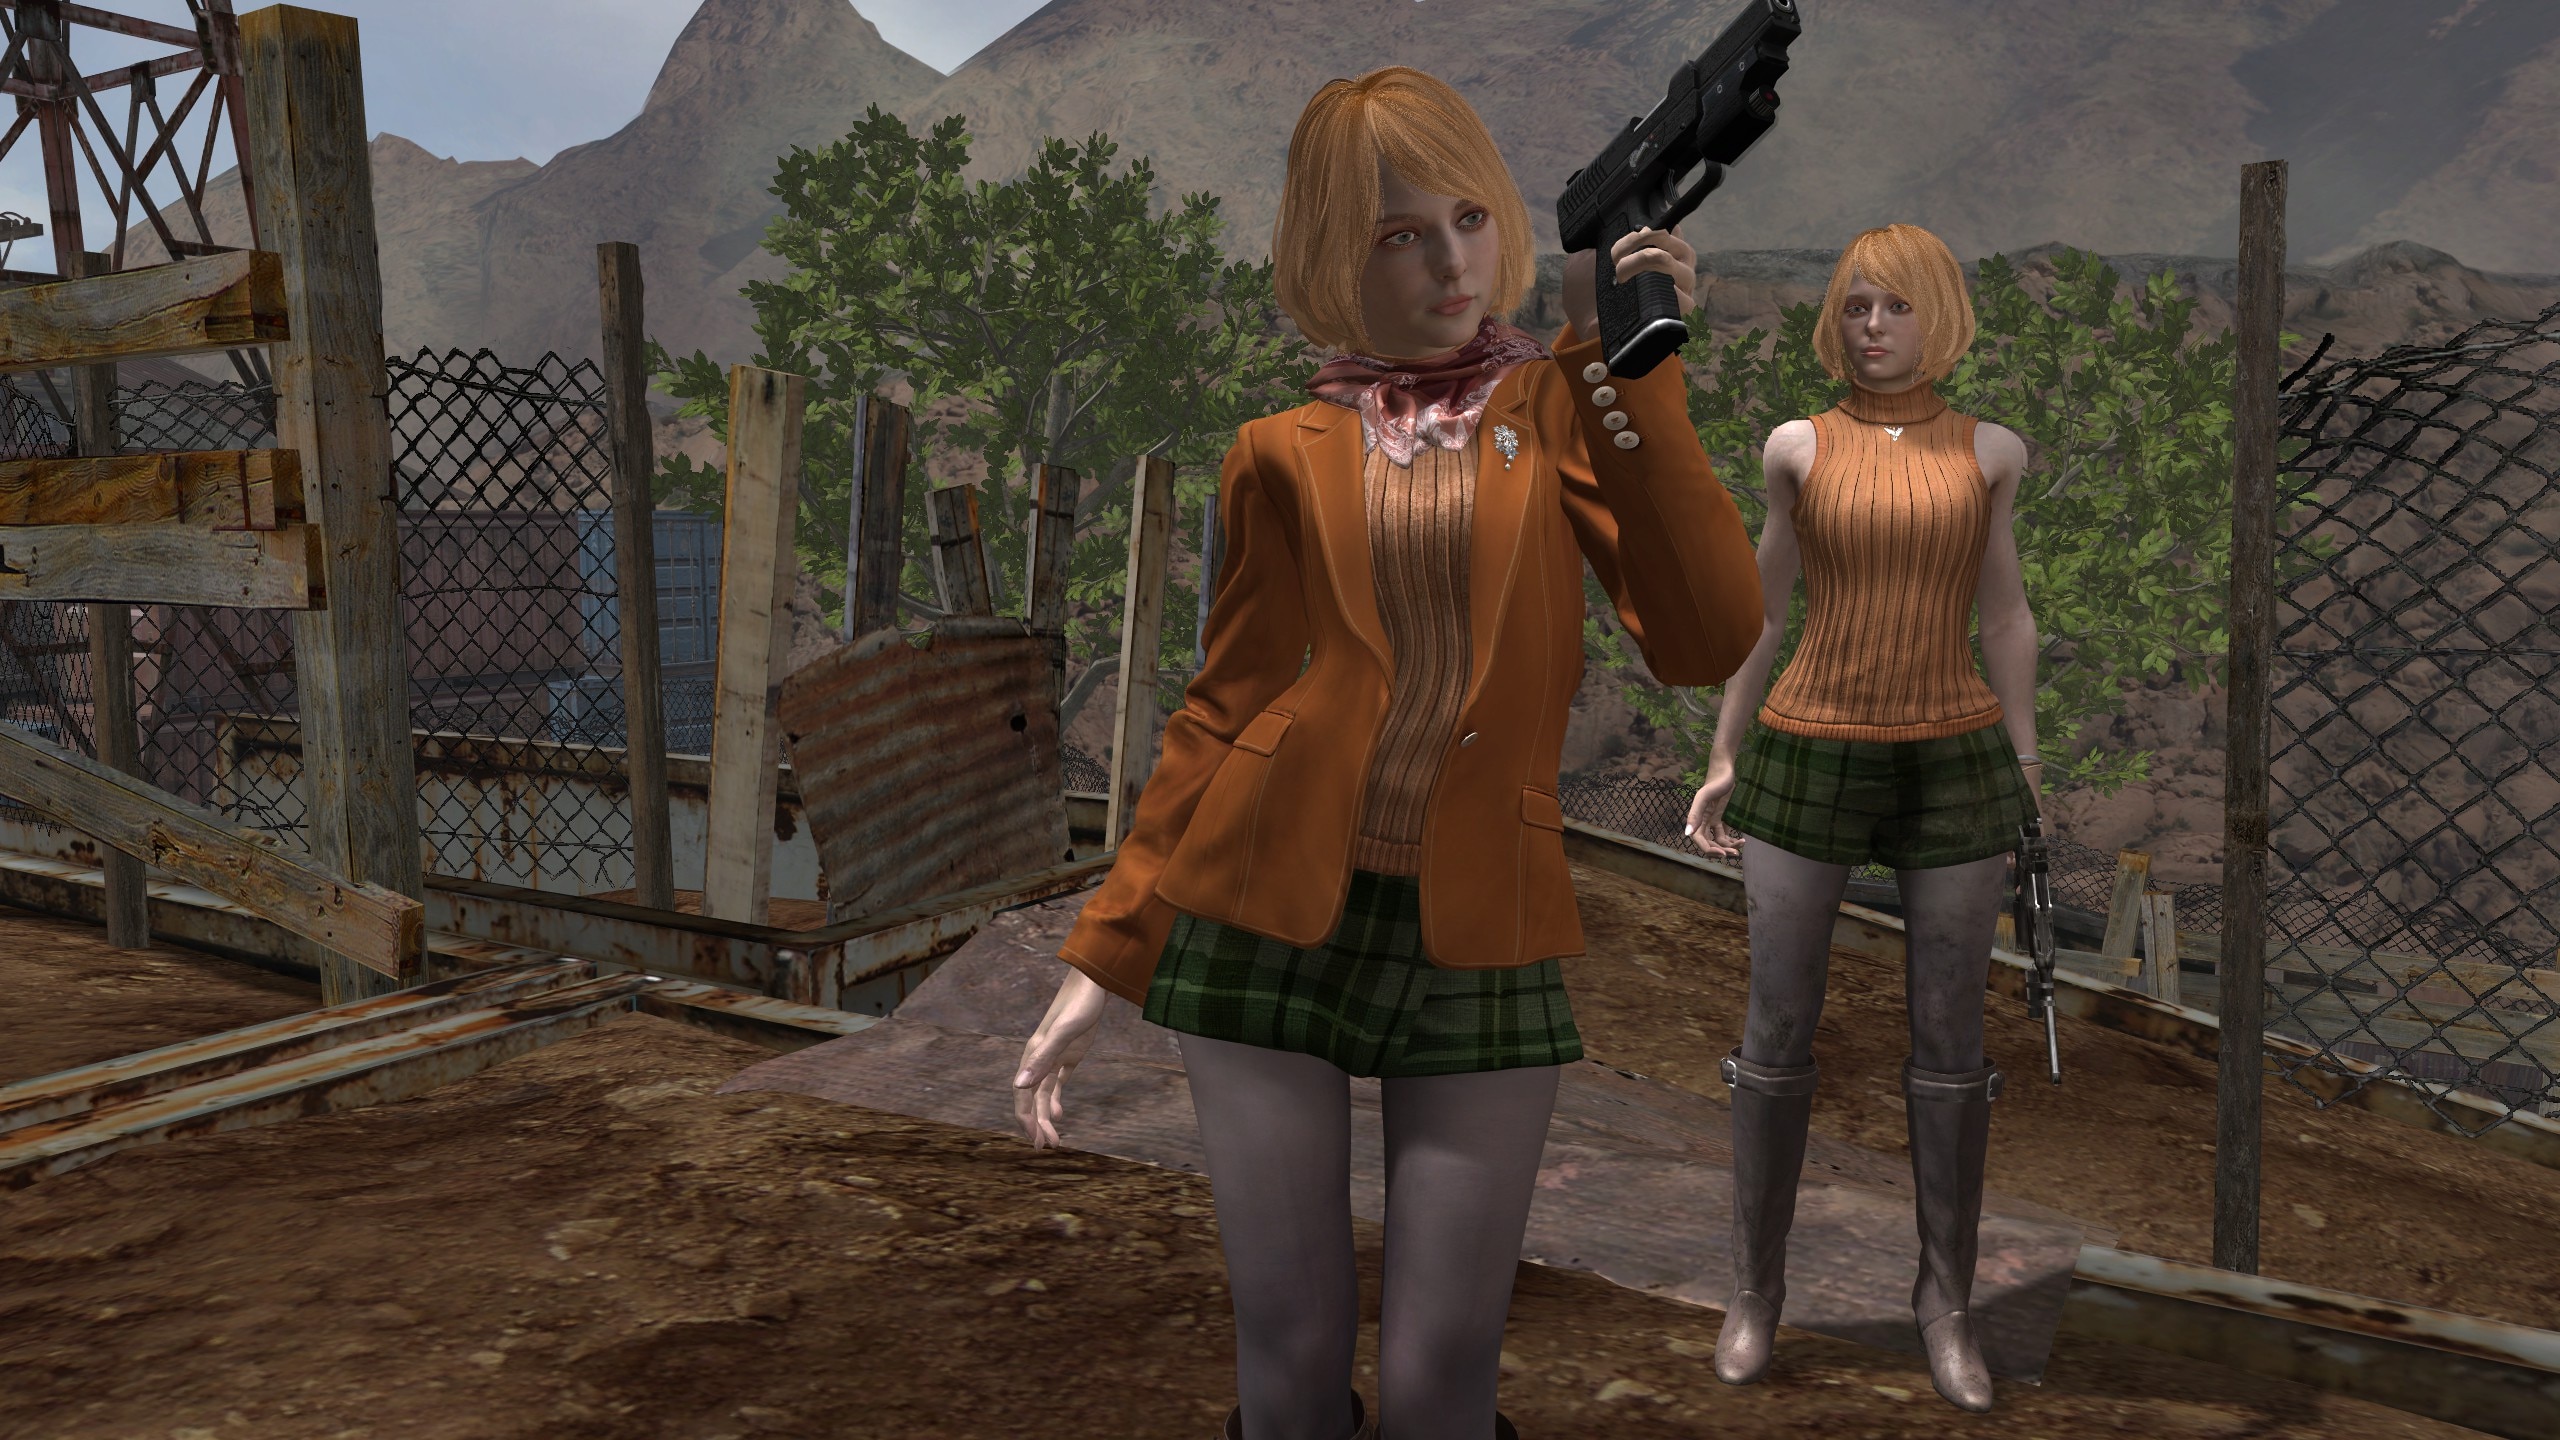 Resident Evil 4 Remake - Playable Ashley Mod Showcase w/ Download